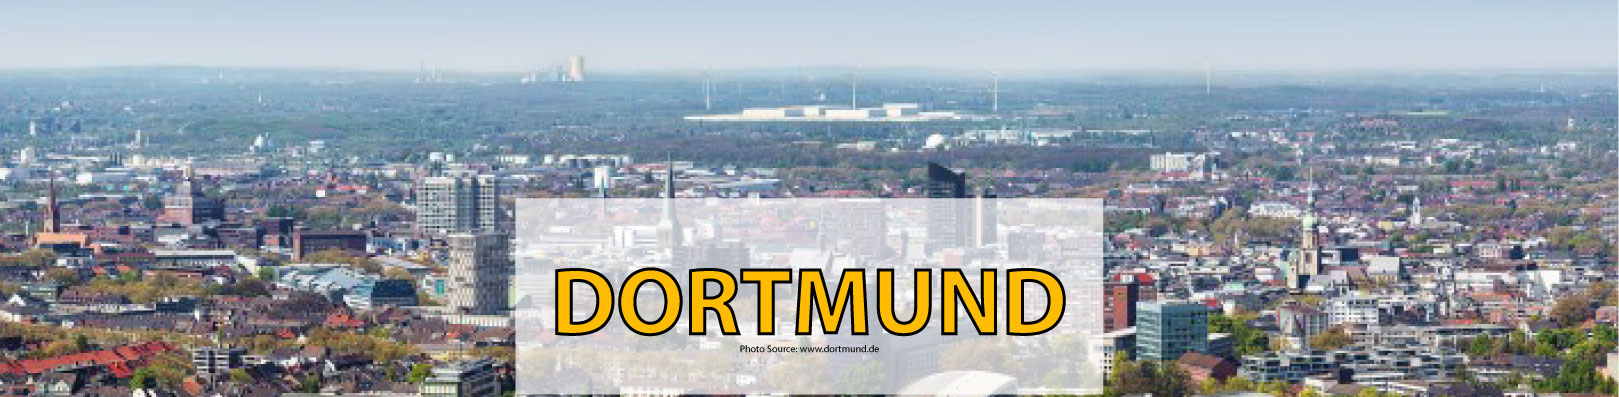 About Dortmund city | Dortmund city | Printing in Dortmund city | Dortmund in Germany | Advertising in Dortmund | HMi GmbH in Dortmund | order printing products in dortmund with best prices